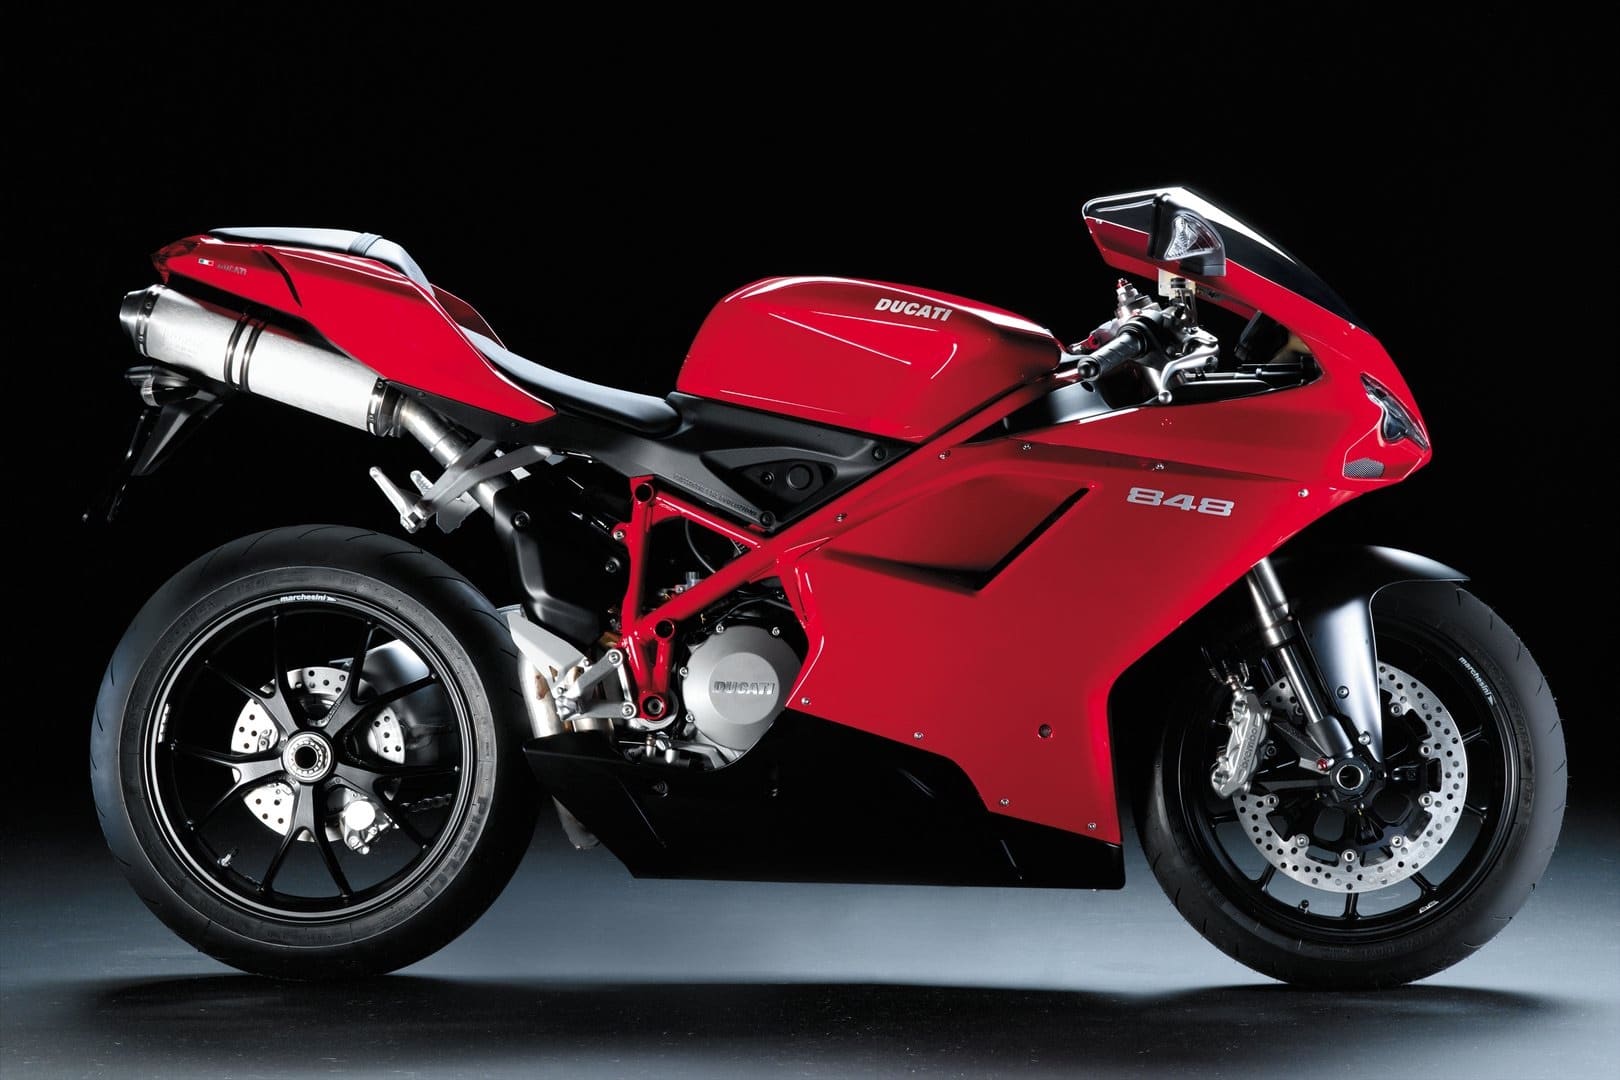 Ducati 848 base model red and black RHS studio